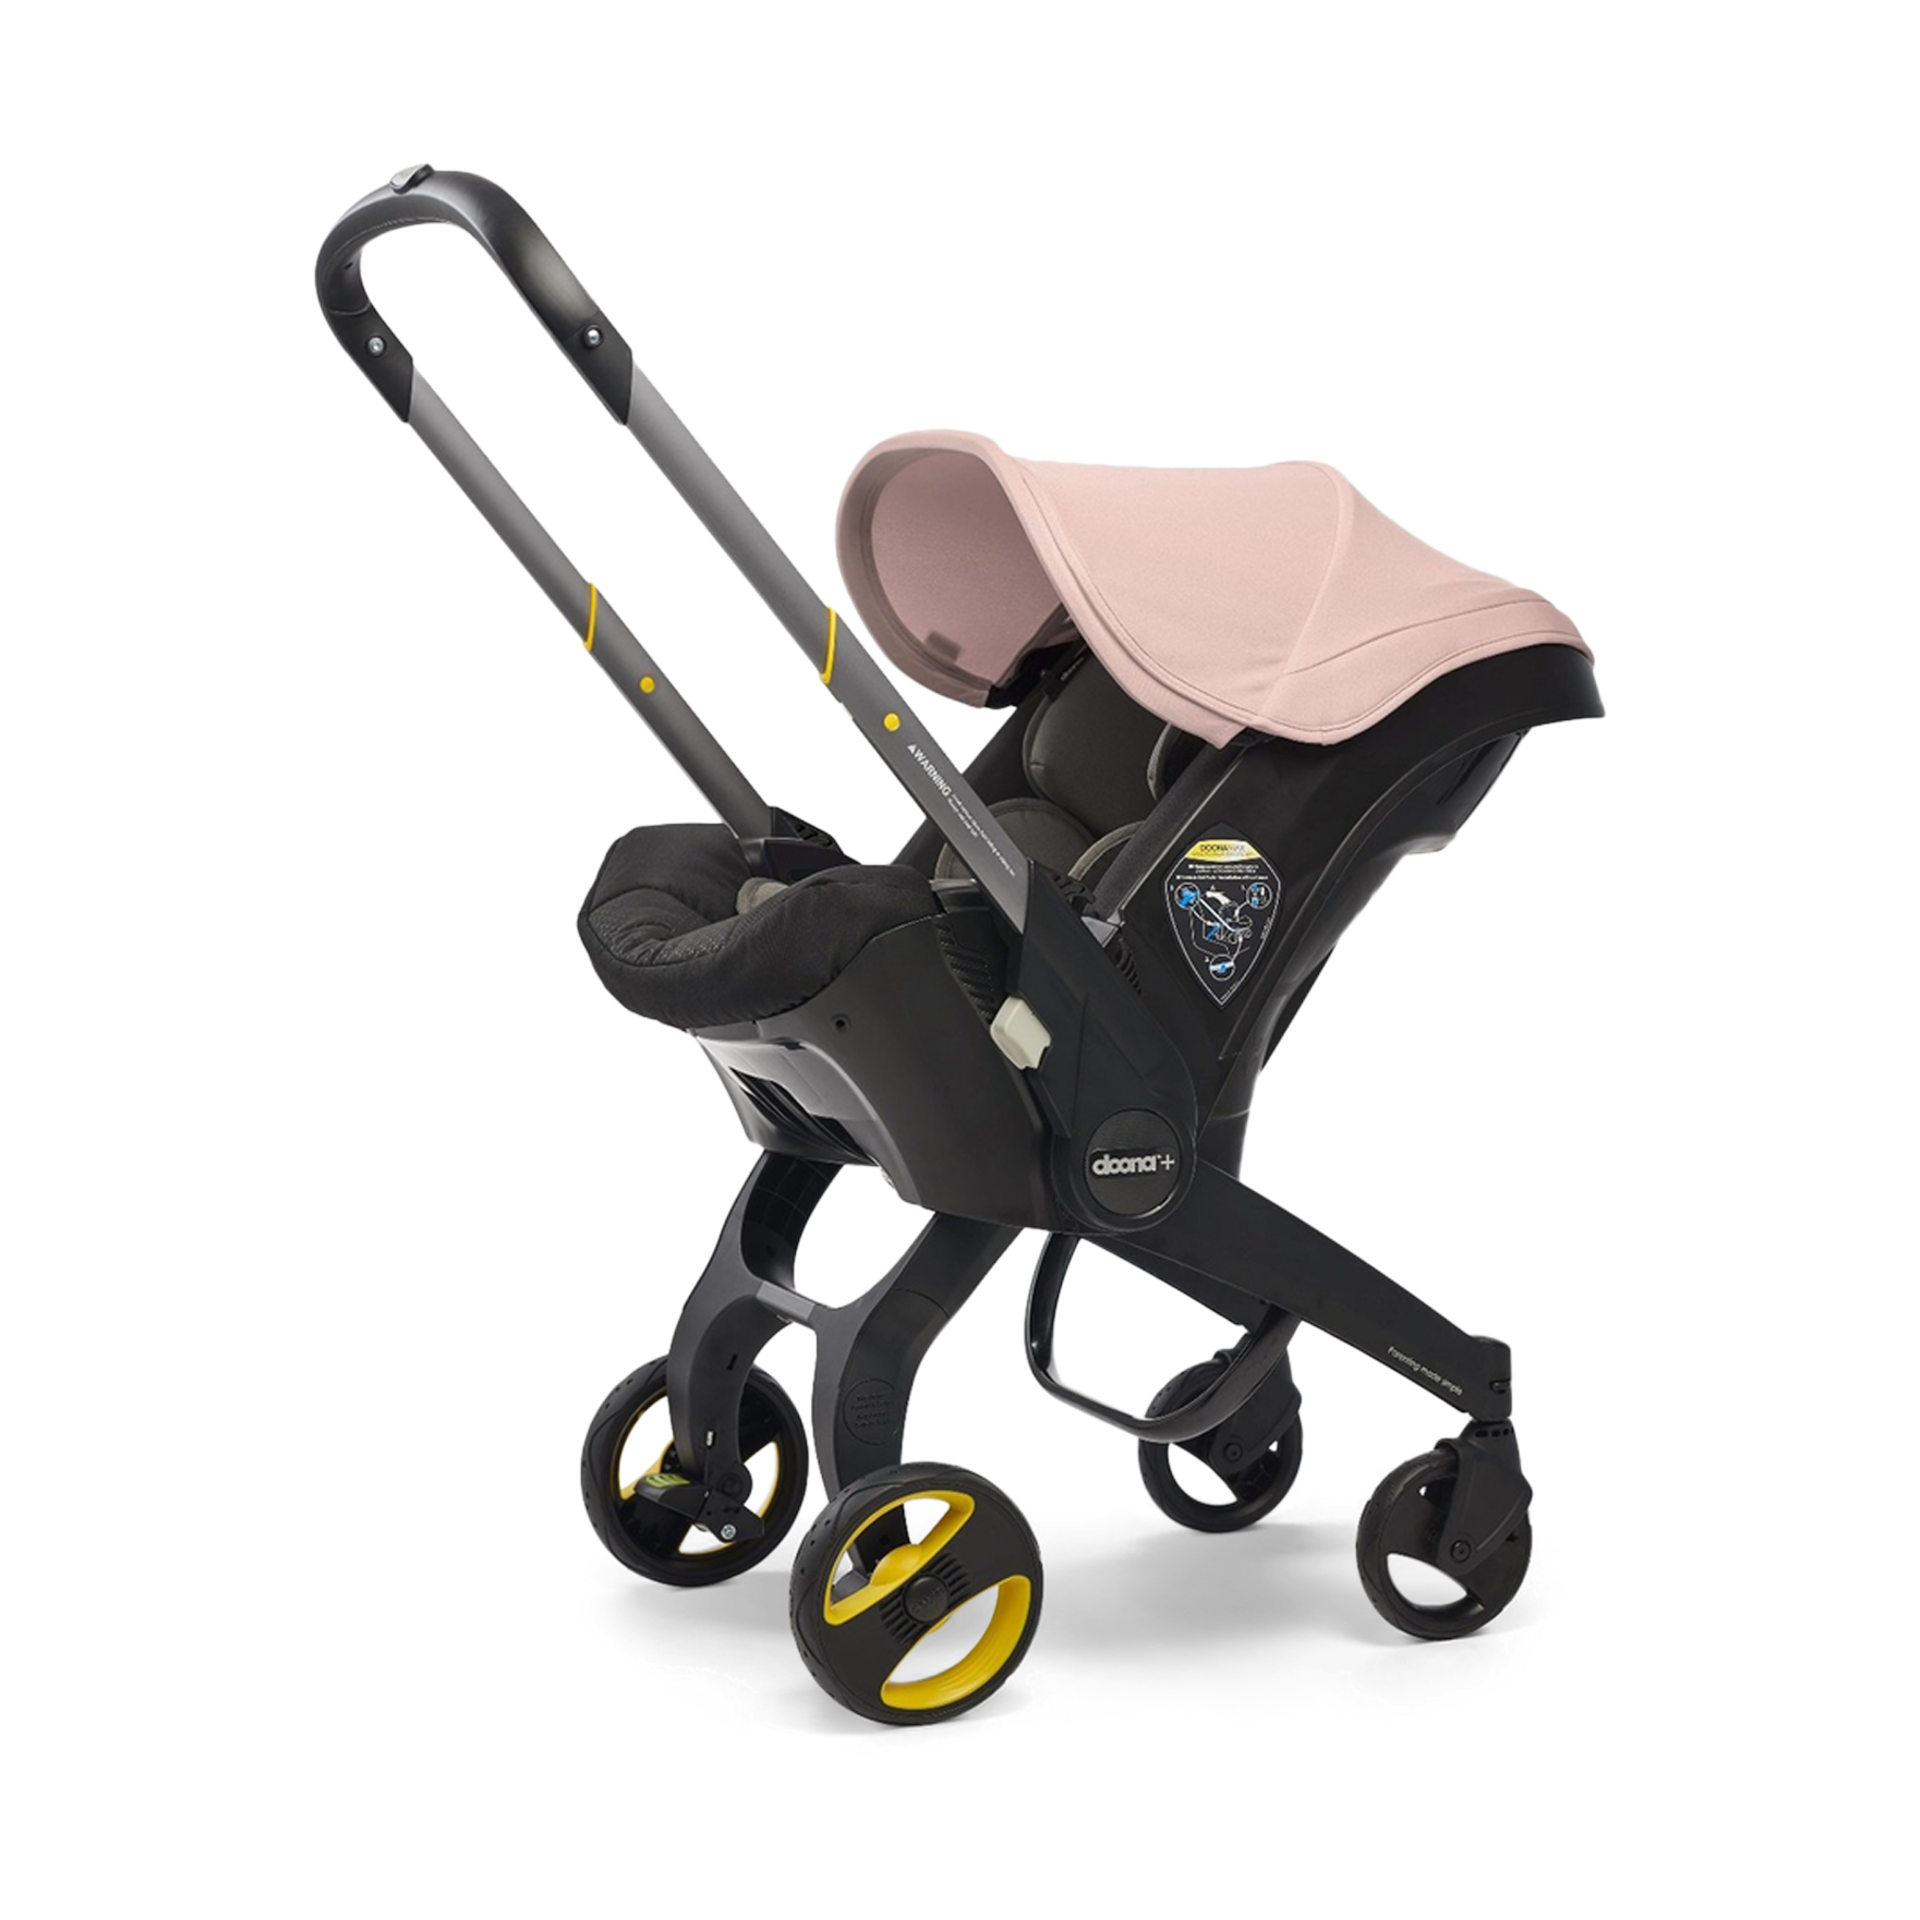 car seat baby stroller